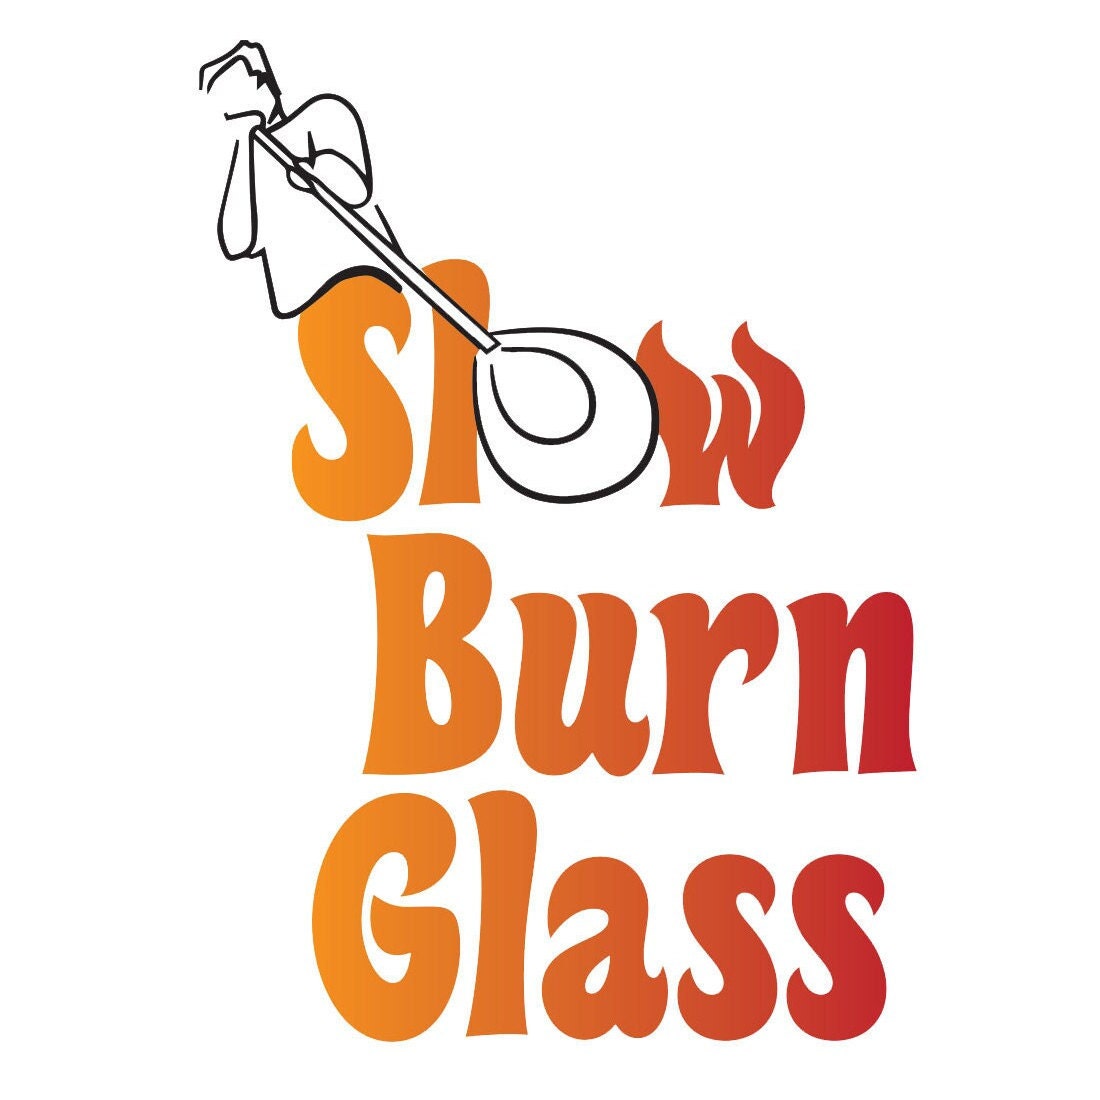 Stemless Wine Glass (set of 2) - Slow Burn Glass